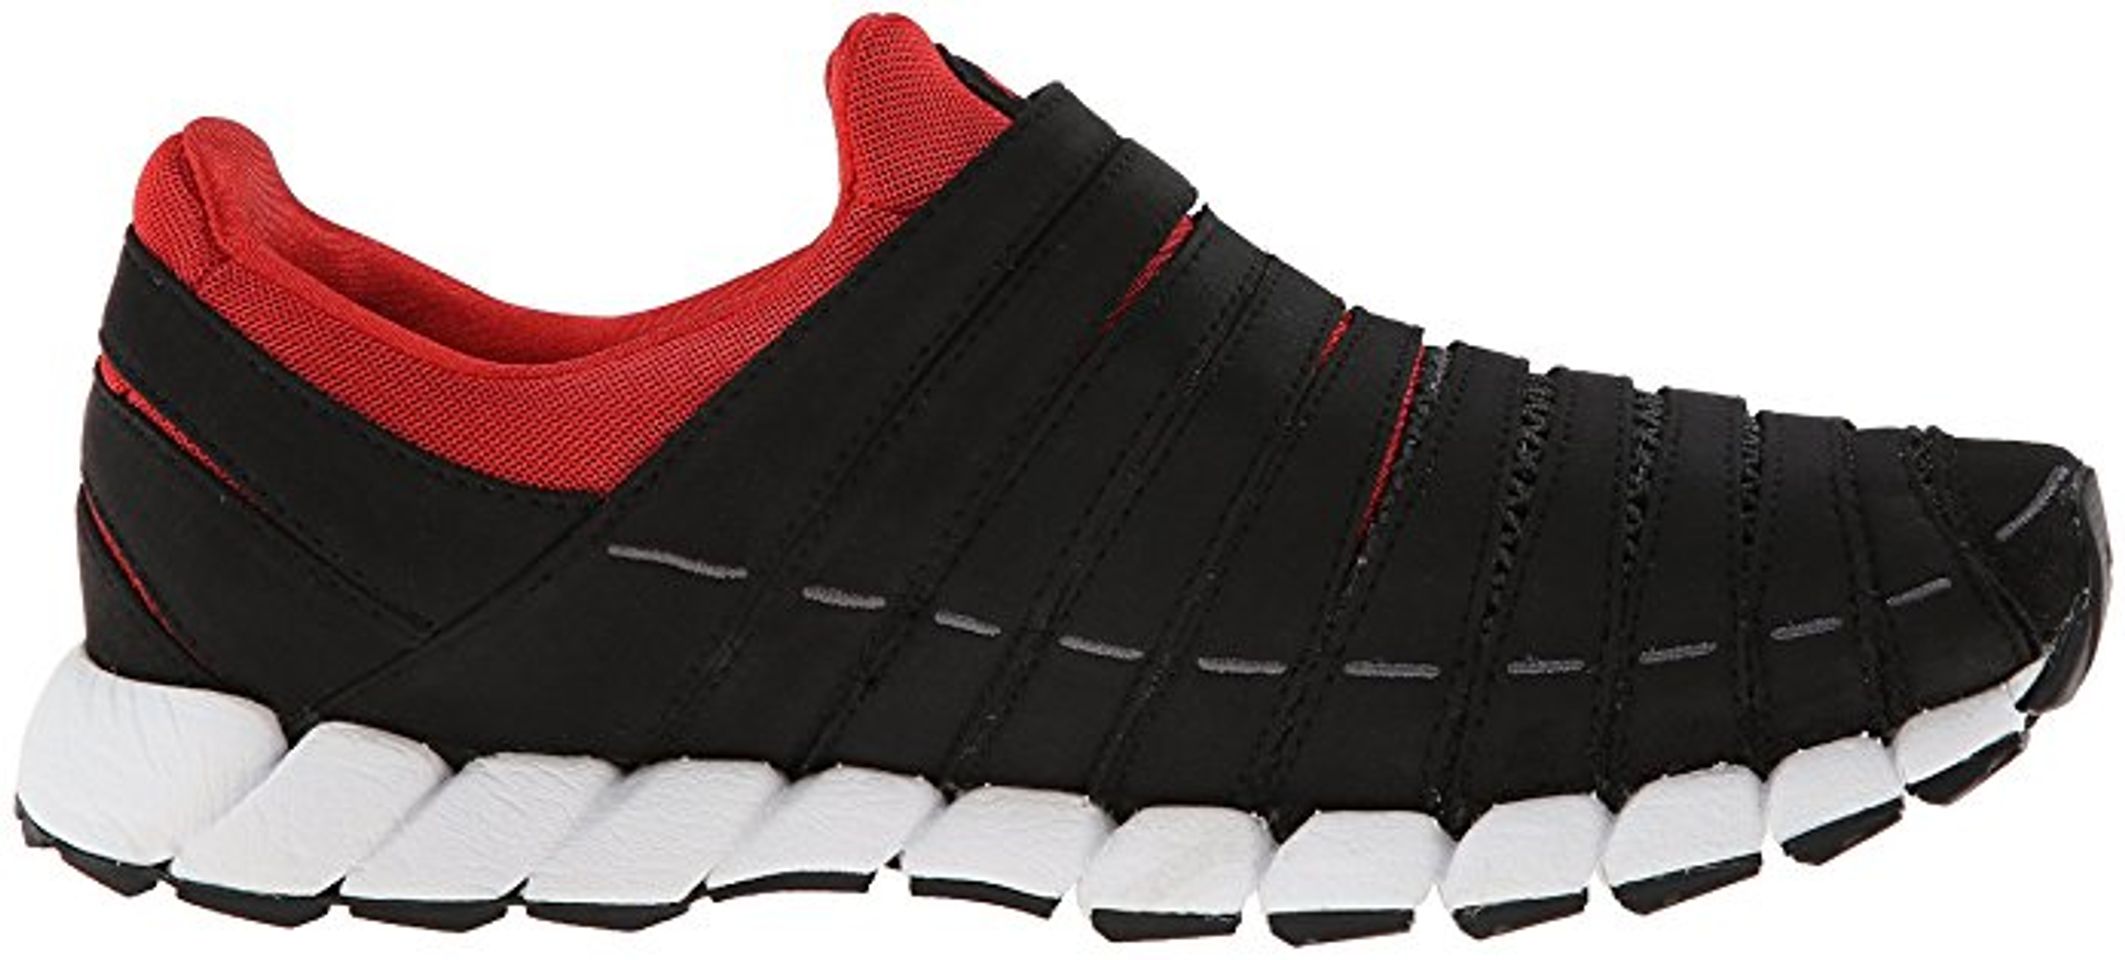 Giày thể thao nam Puma Osu NM màu Black/Dark Shadow/Red 6